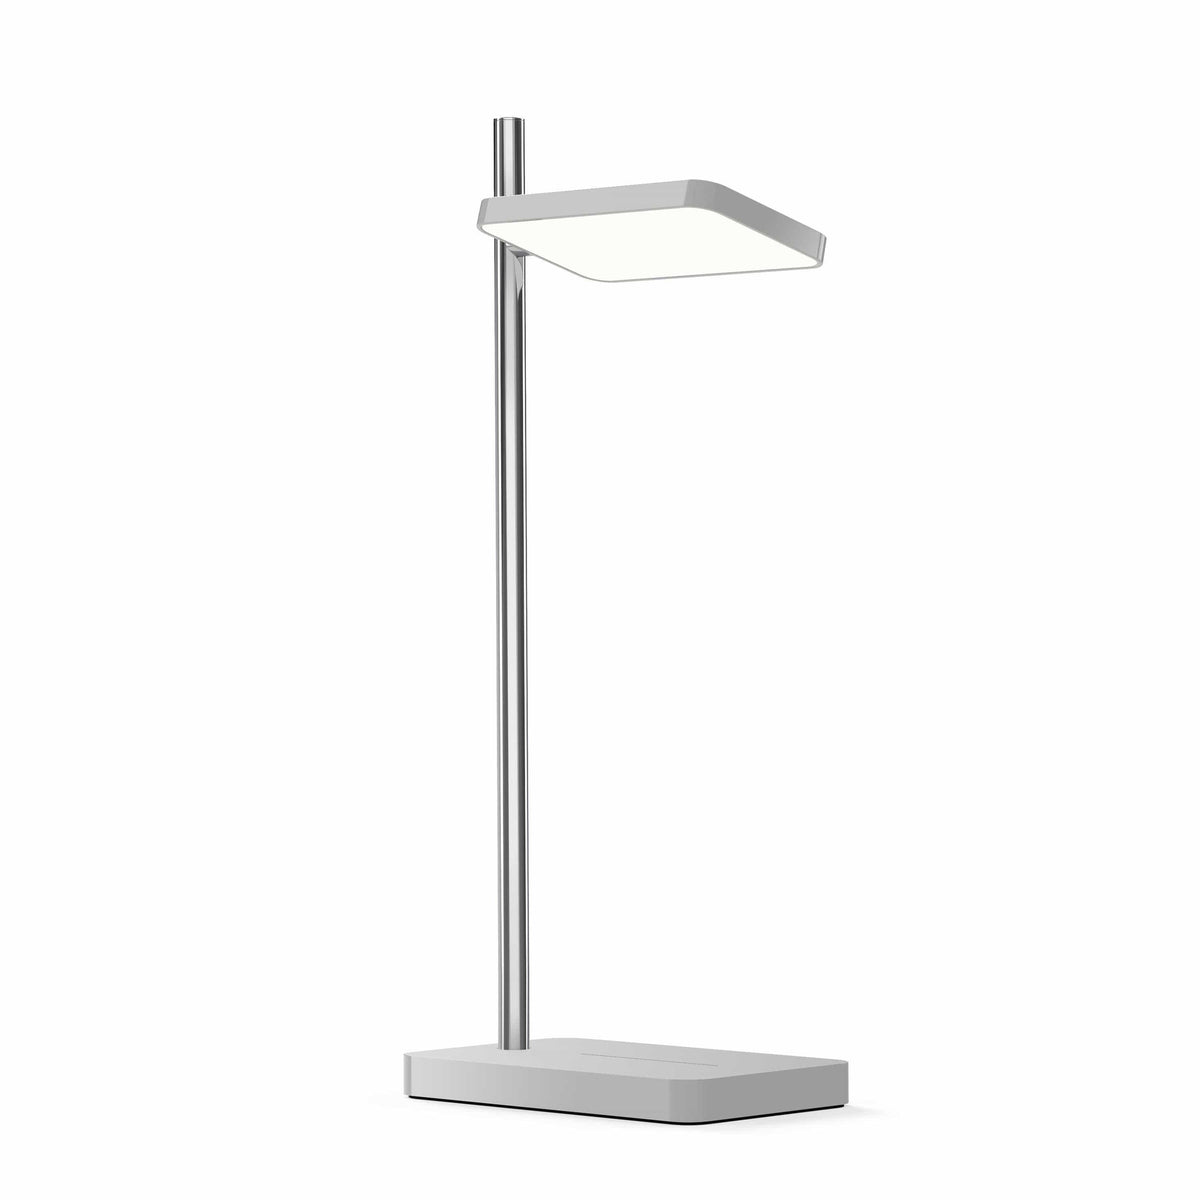 Pablo Designs - Talia Table Lamp - TALI TBL GRY/SLV | Montreal Lighting & Hardware